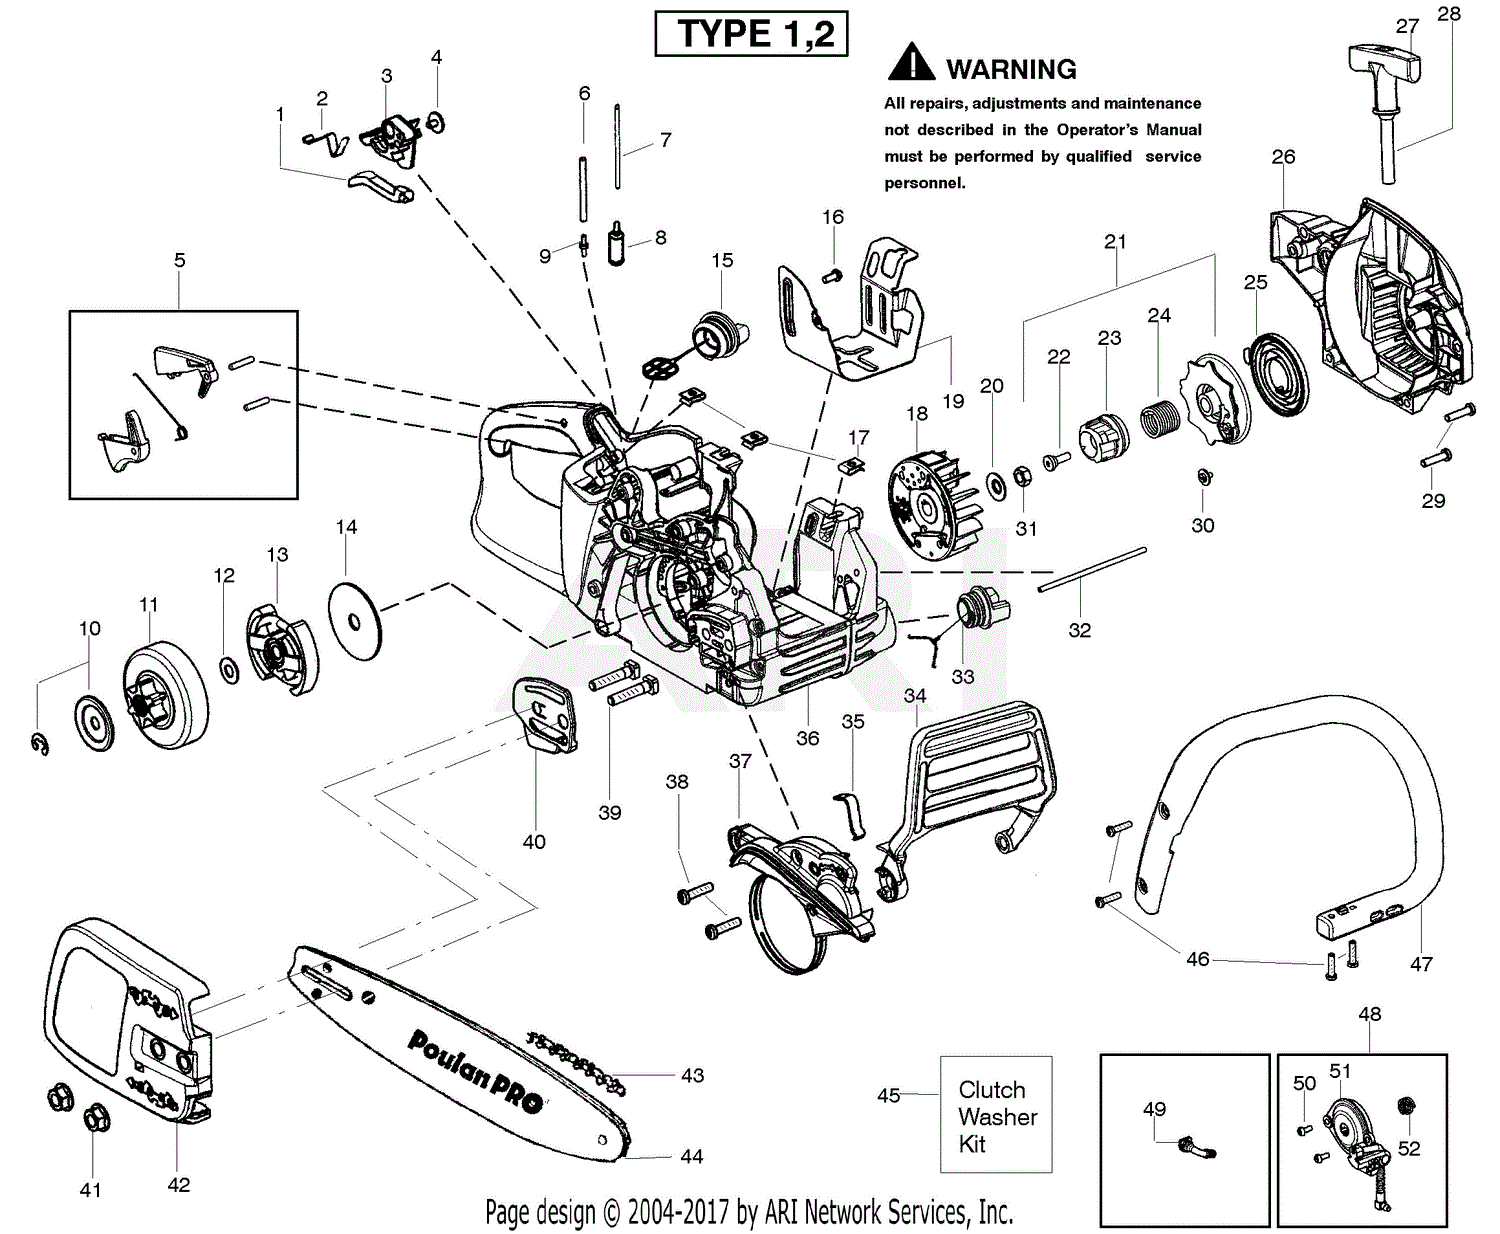 mac 3516 chainsaw manual pdf